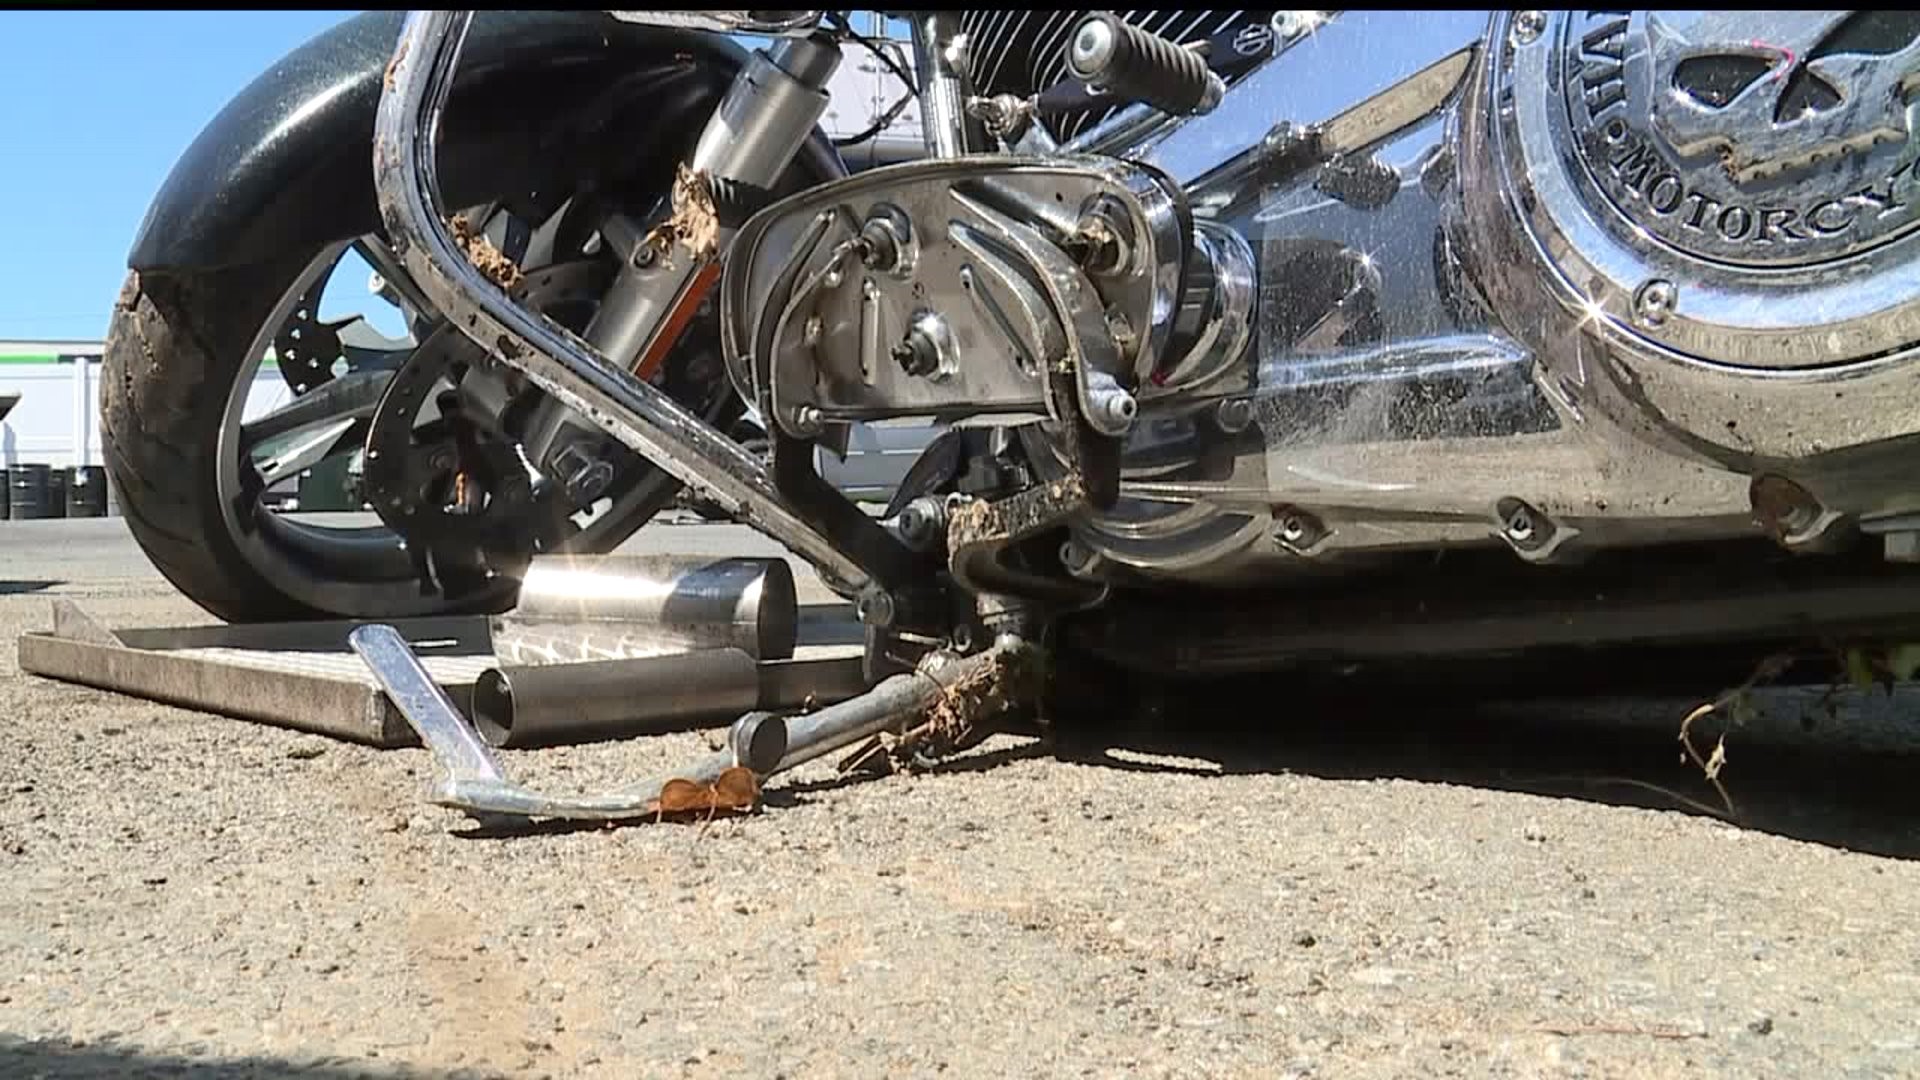 Biker hit by driver, left injured on roadway